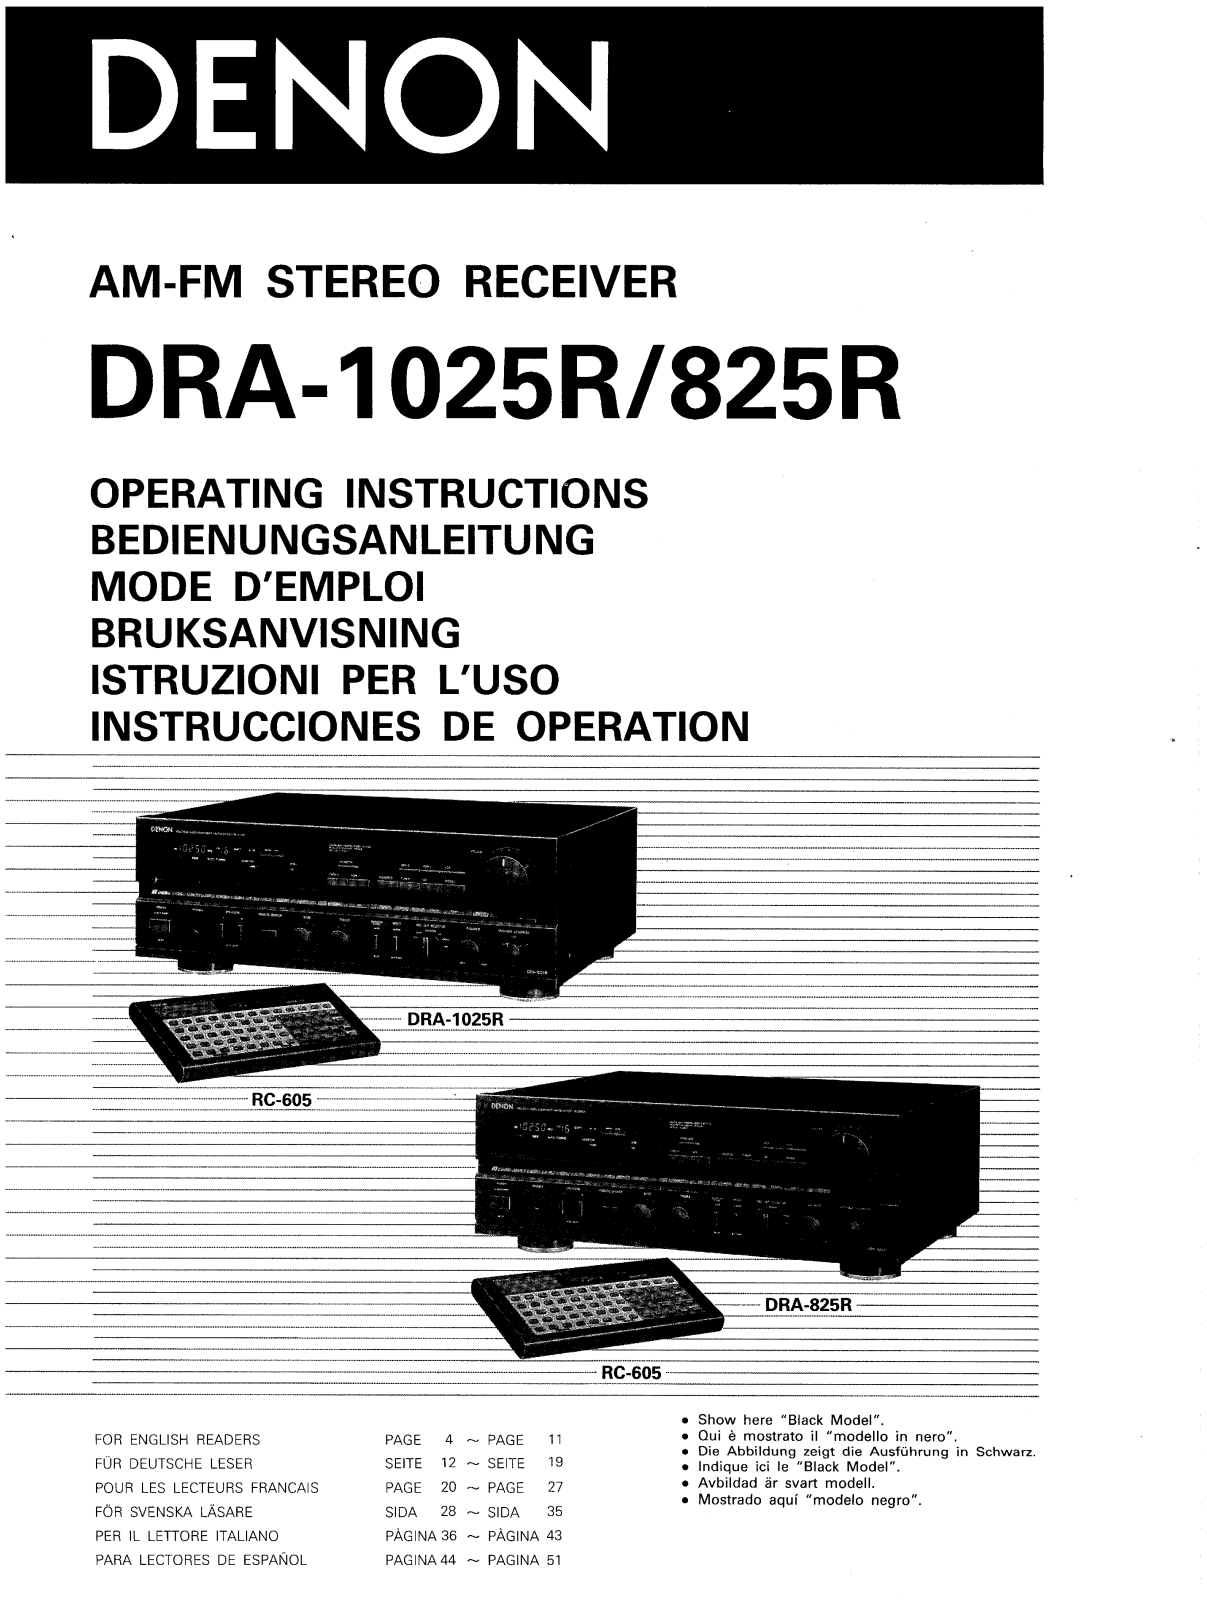 Denon DRA-825R Owner's Manual